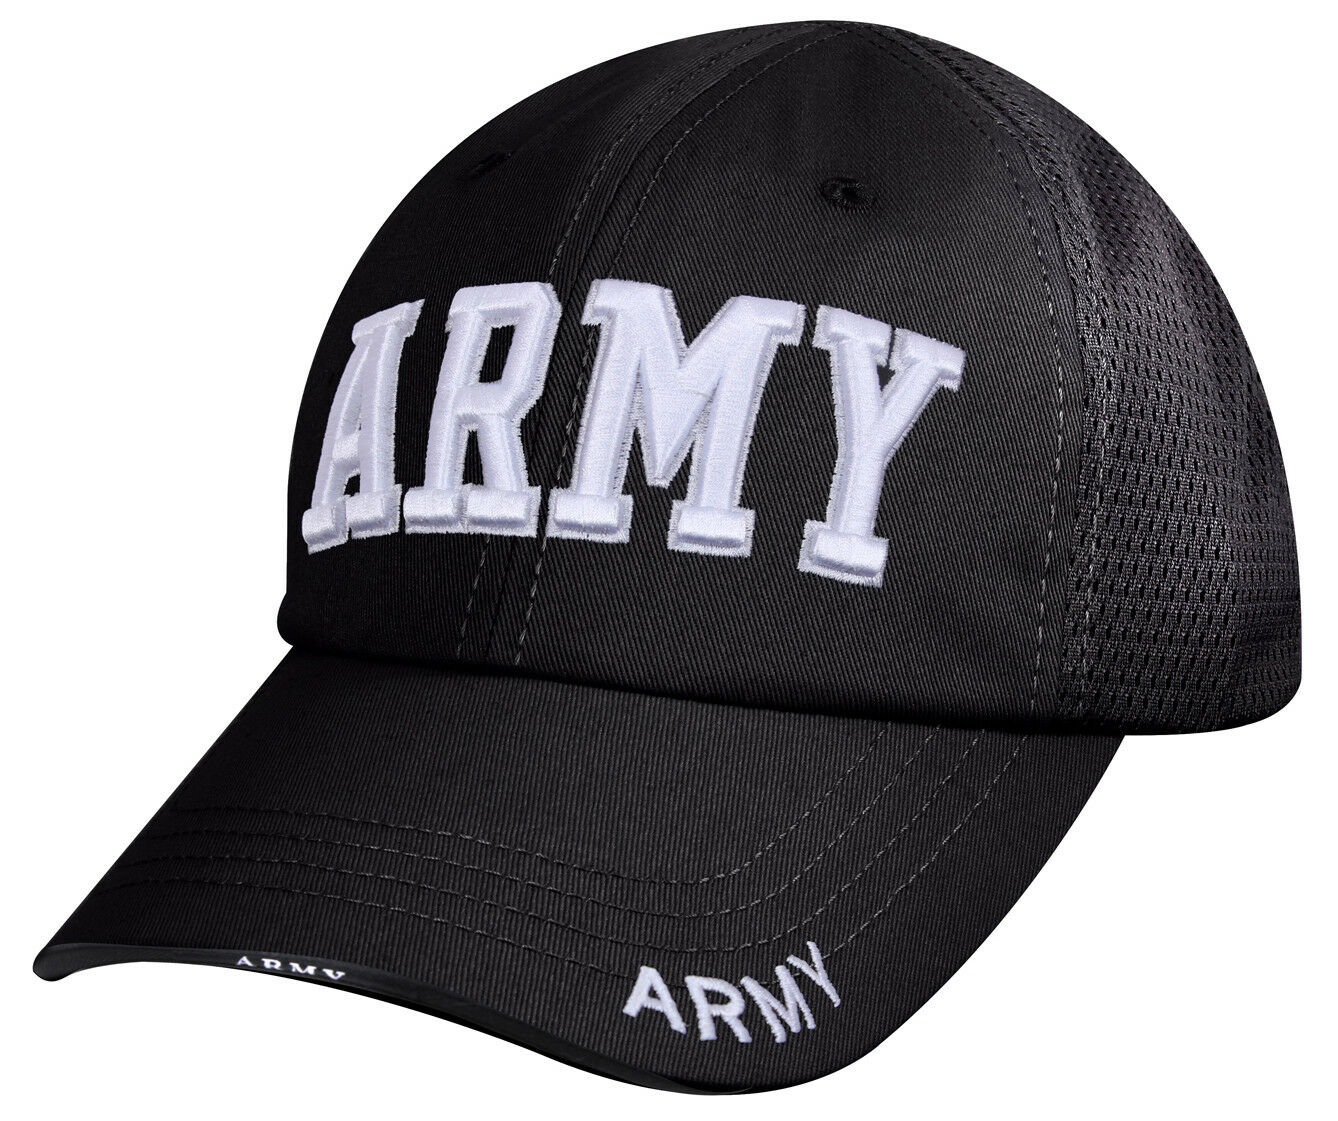 Rothco Mesh Back Army Tactical Cap